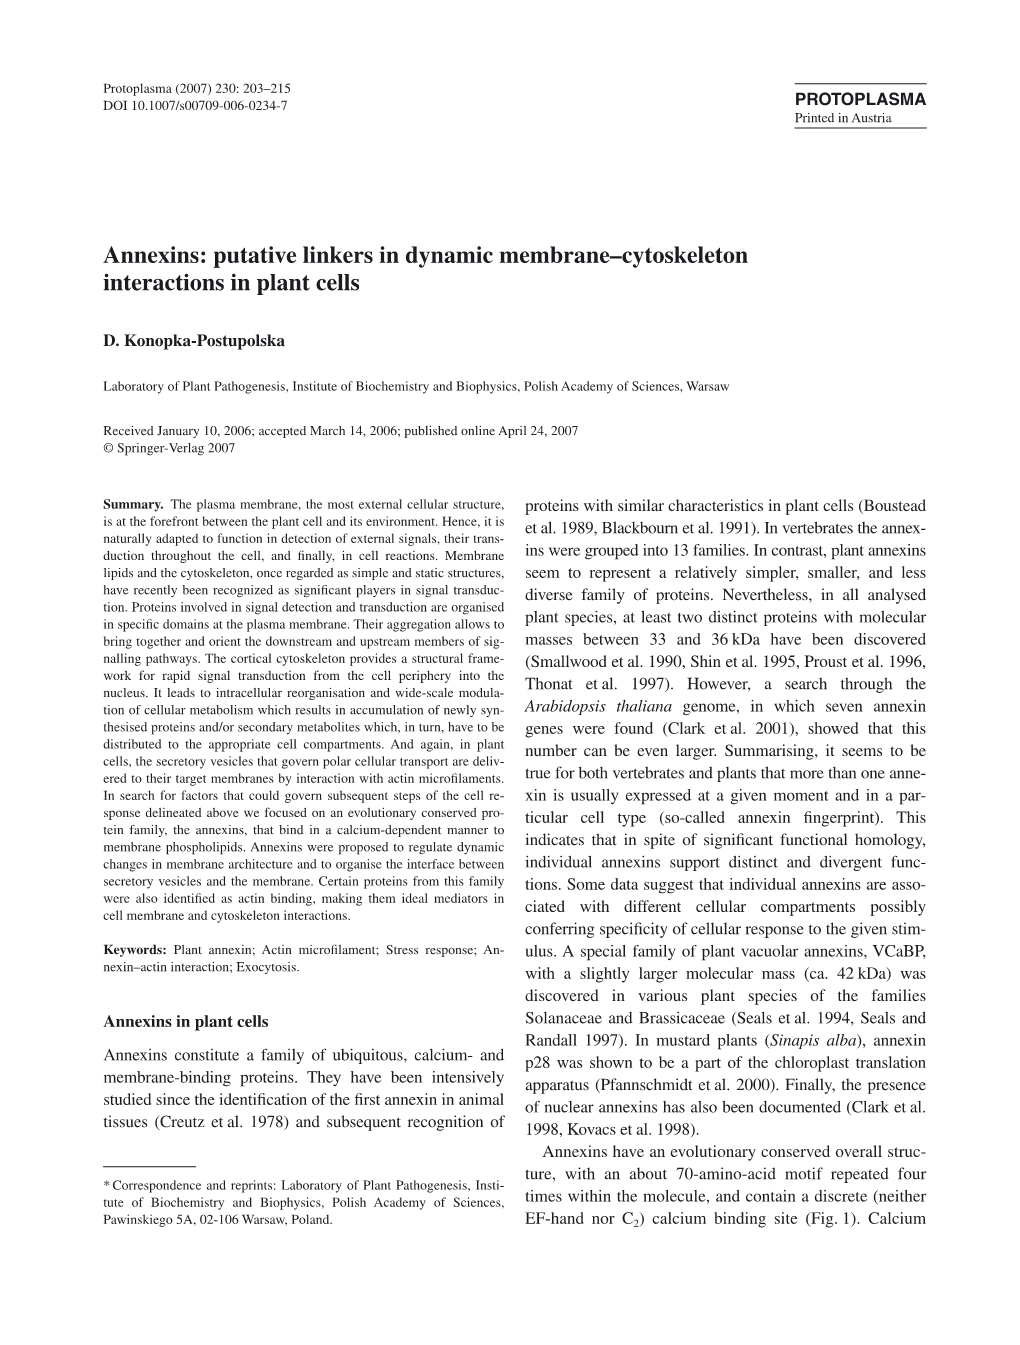 Annexins: Putative Linkers in Dynamic Membrane–Cytoskeleton